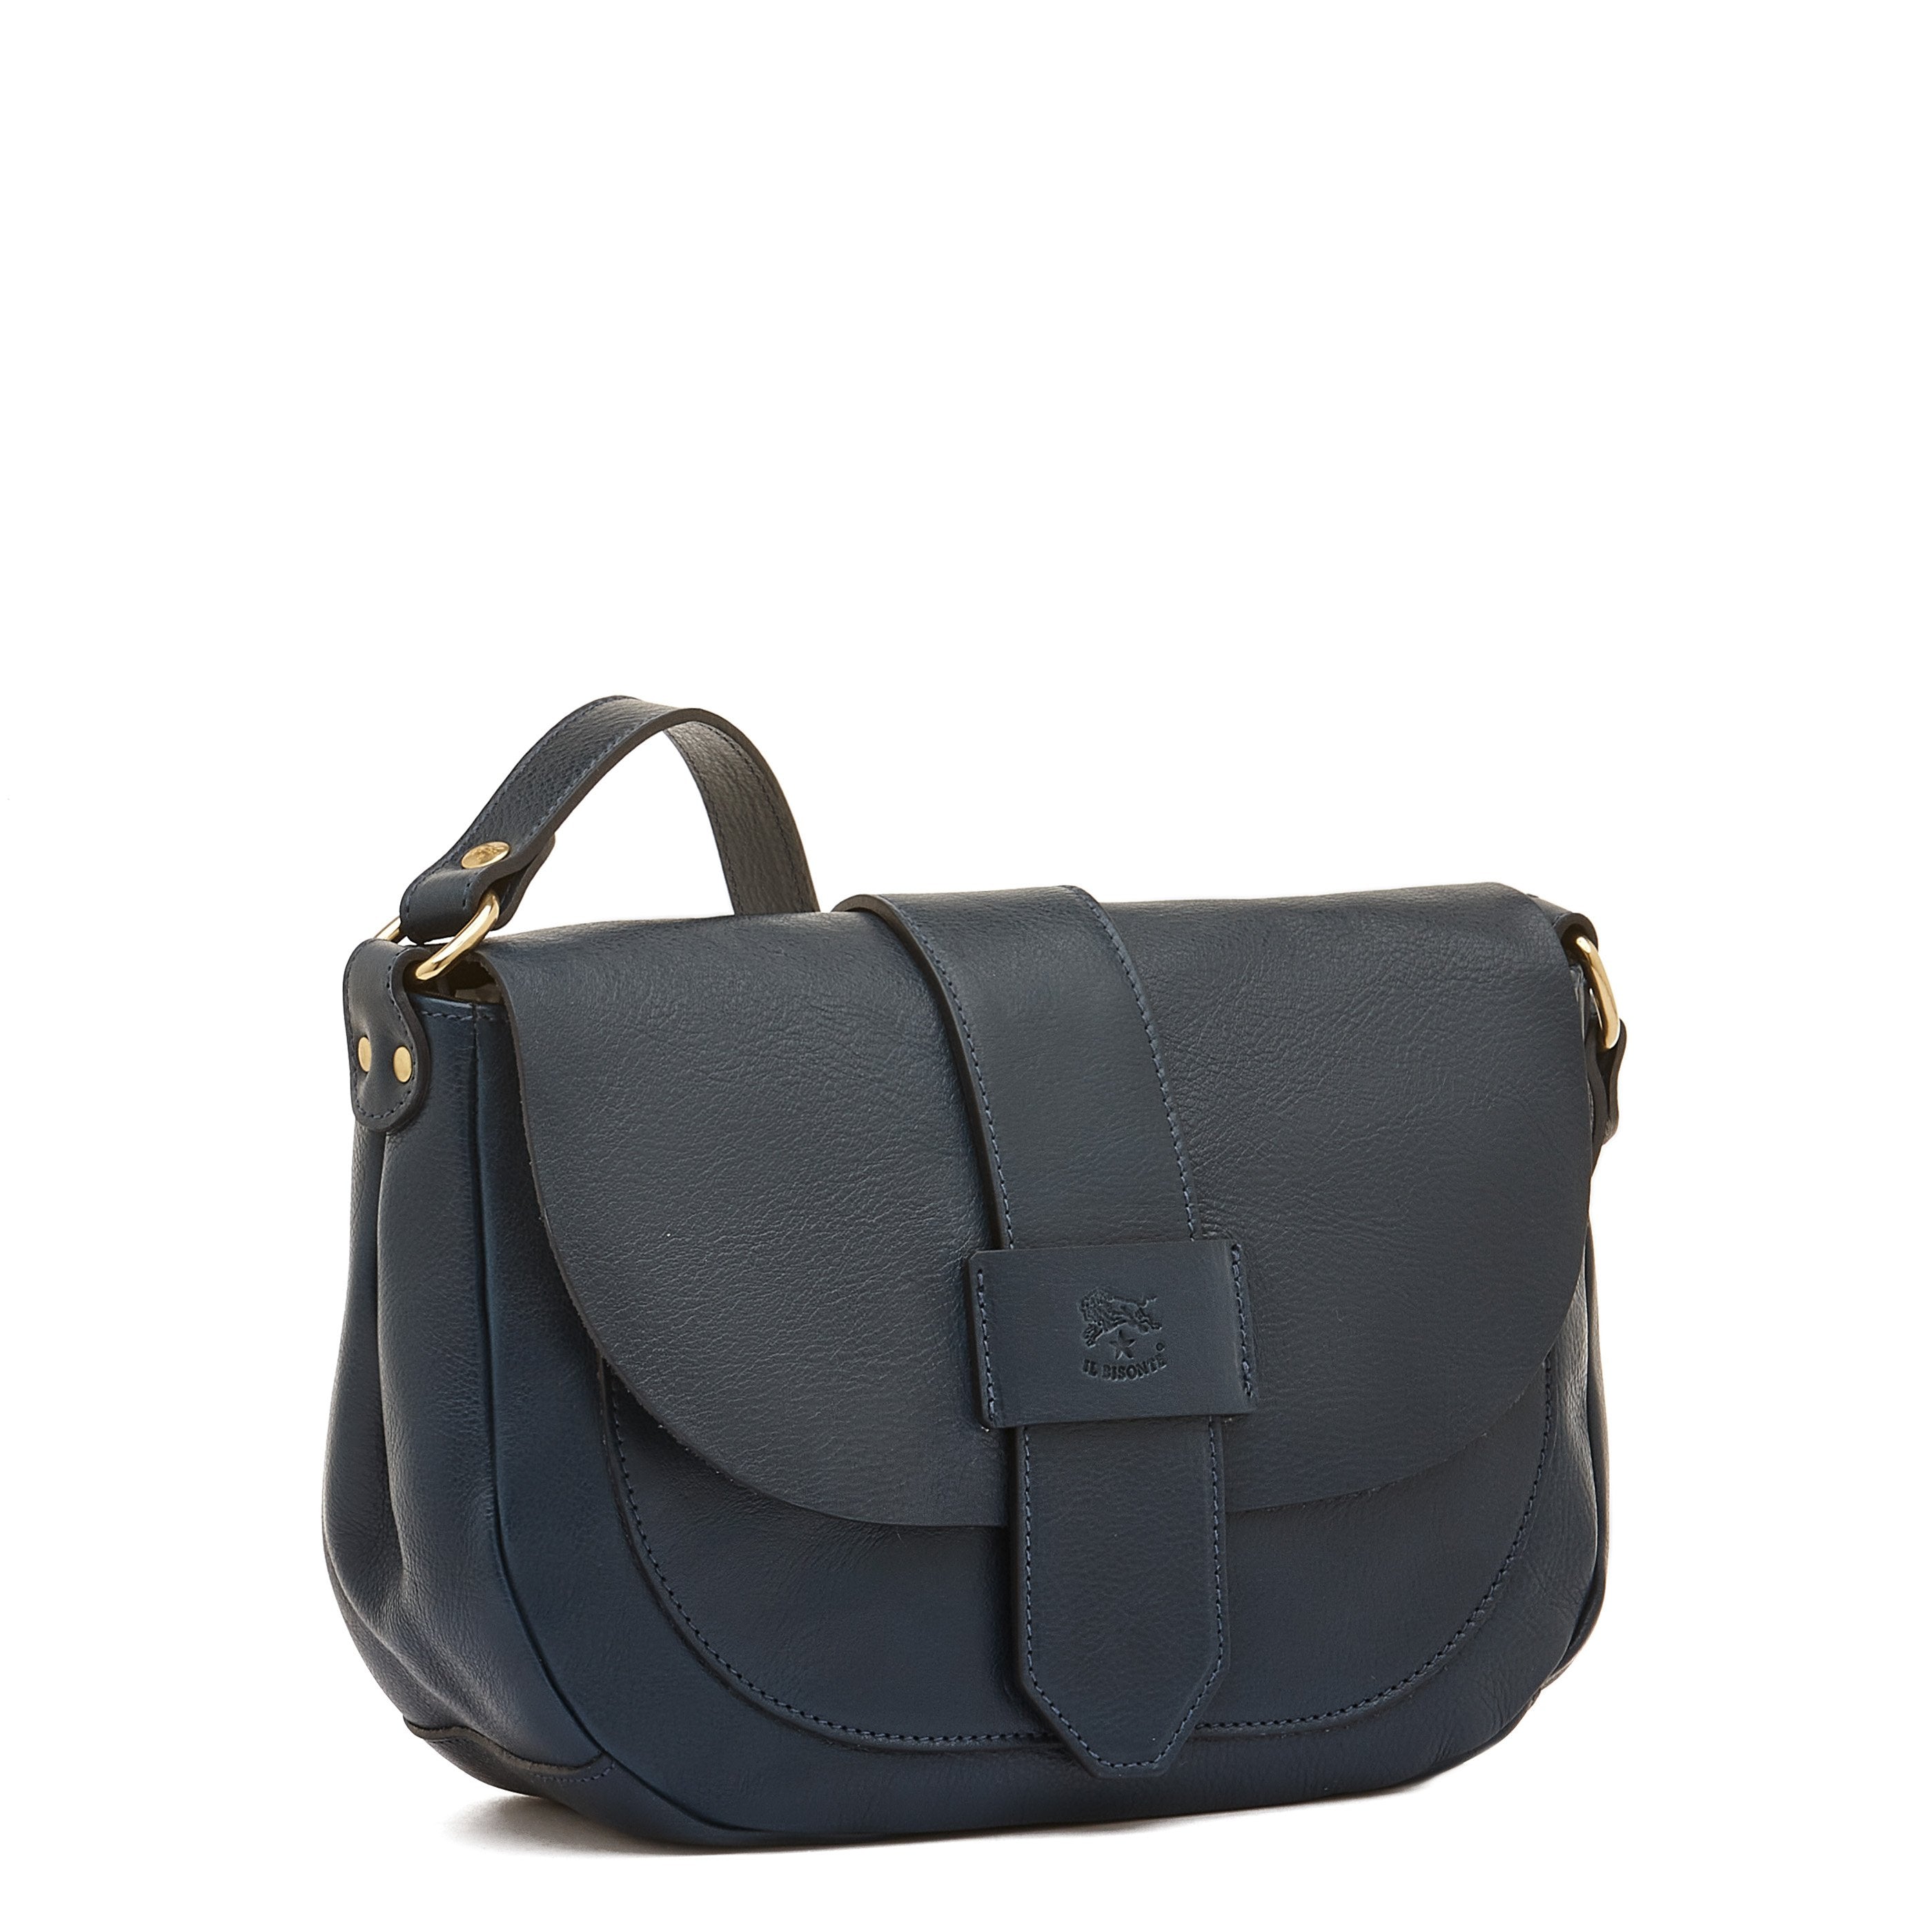 Fausta Medium | Women's crossbody bag in leather color blue